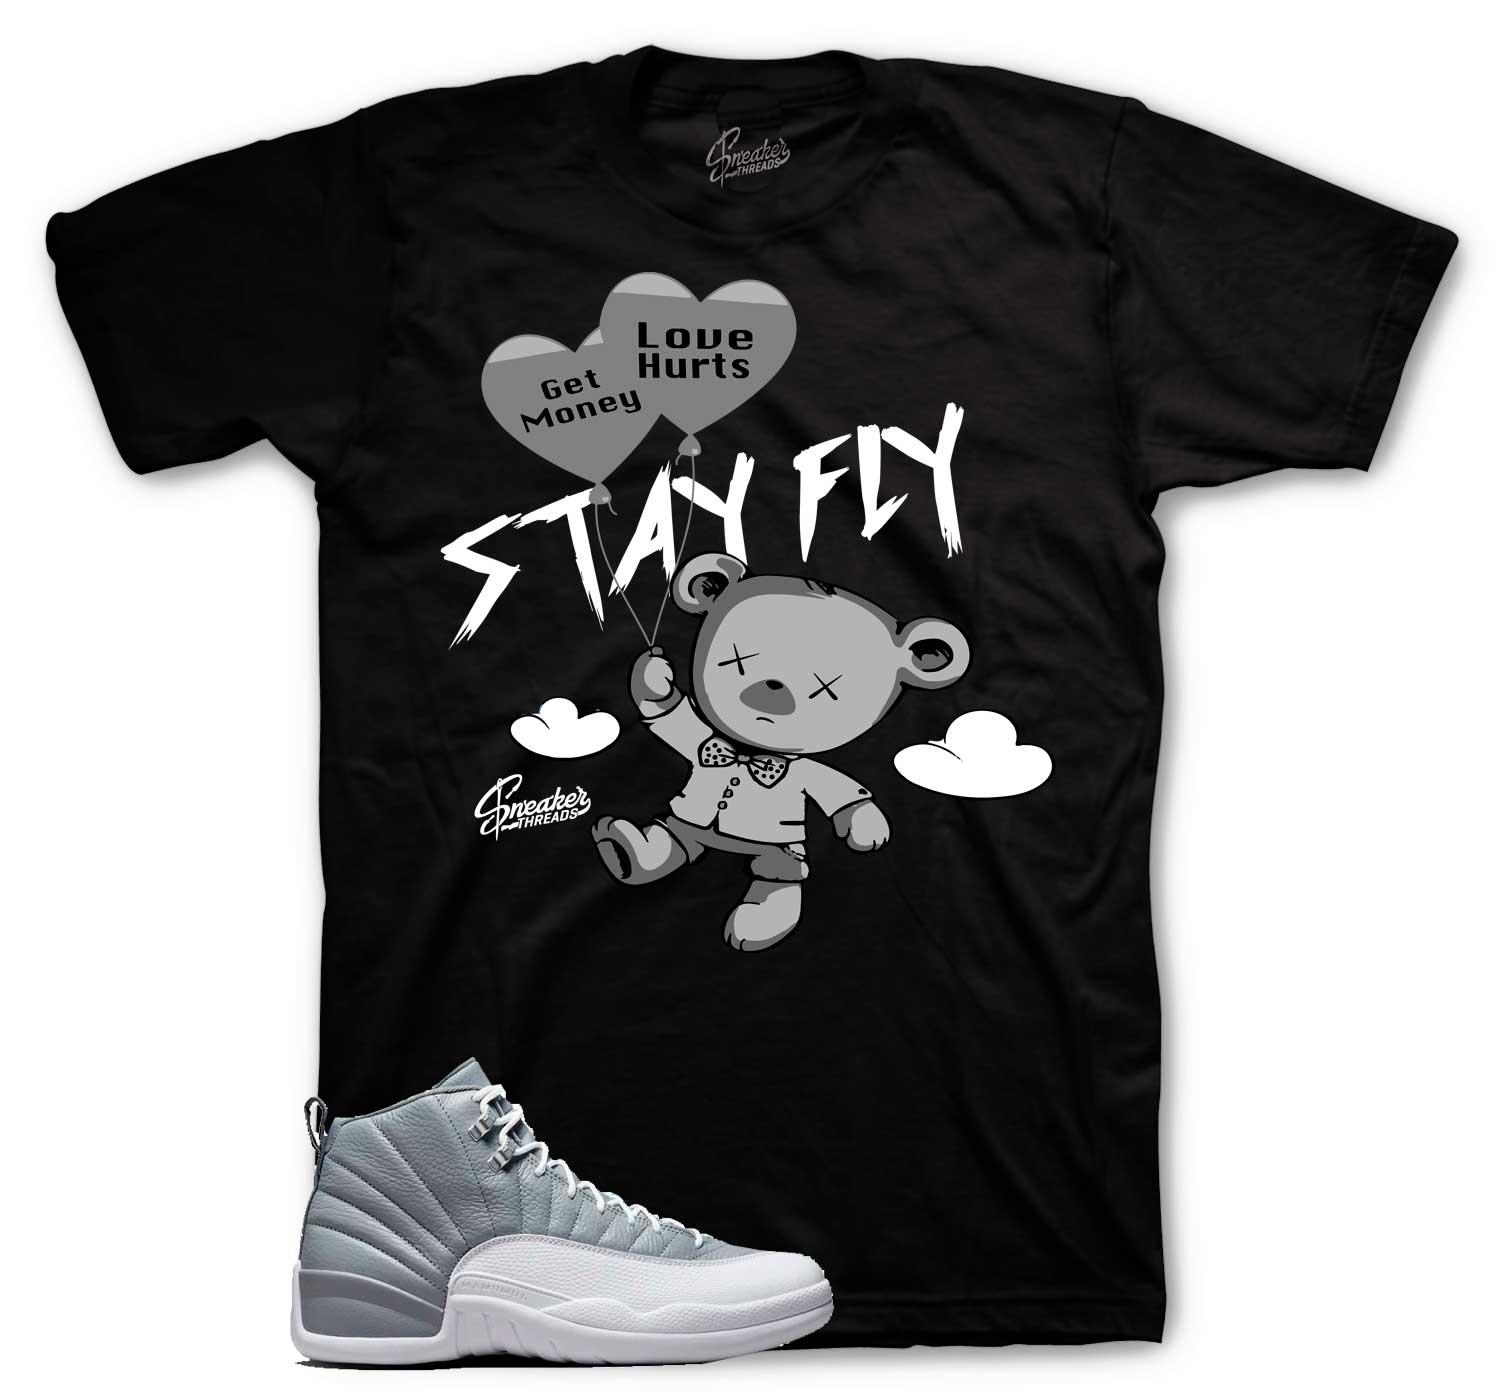 Retro 12 Stealth Shirt - Money Over Love - Black